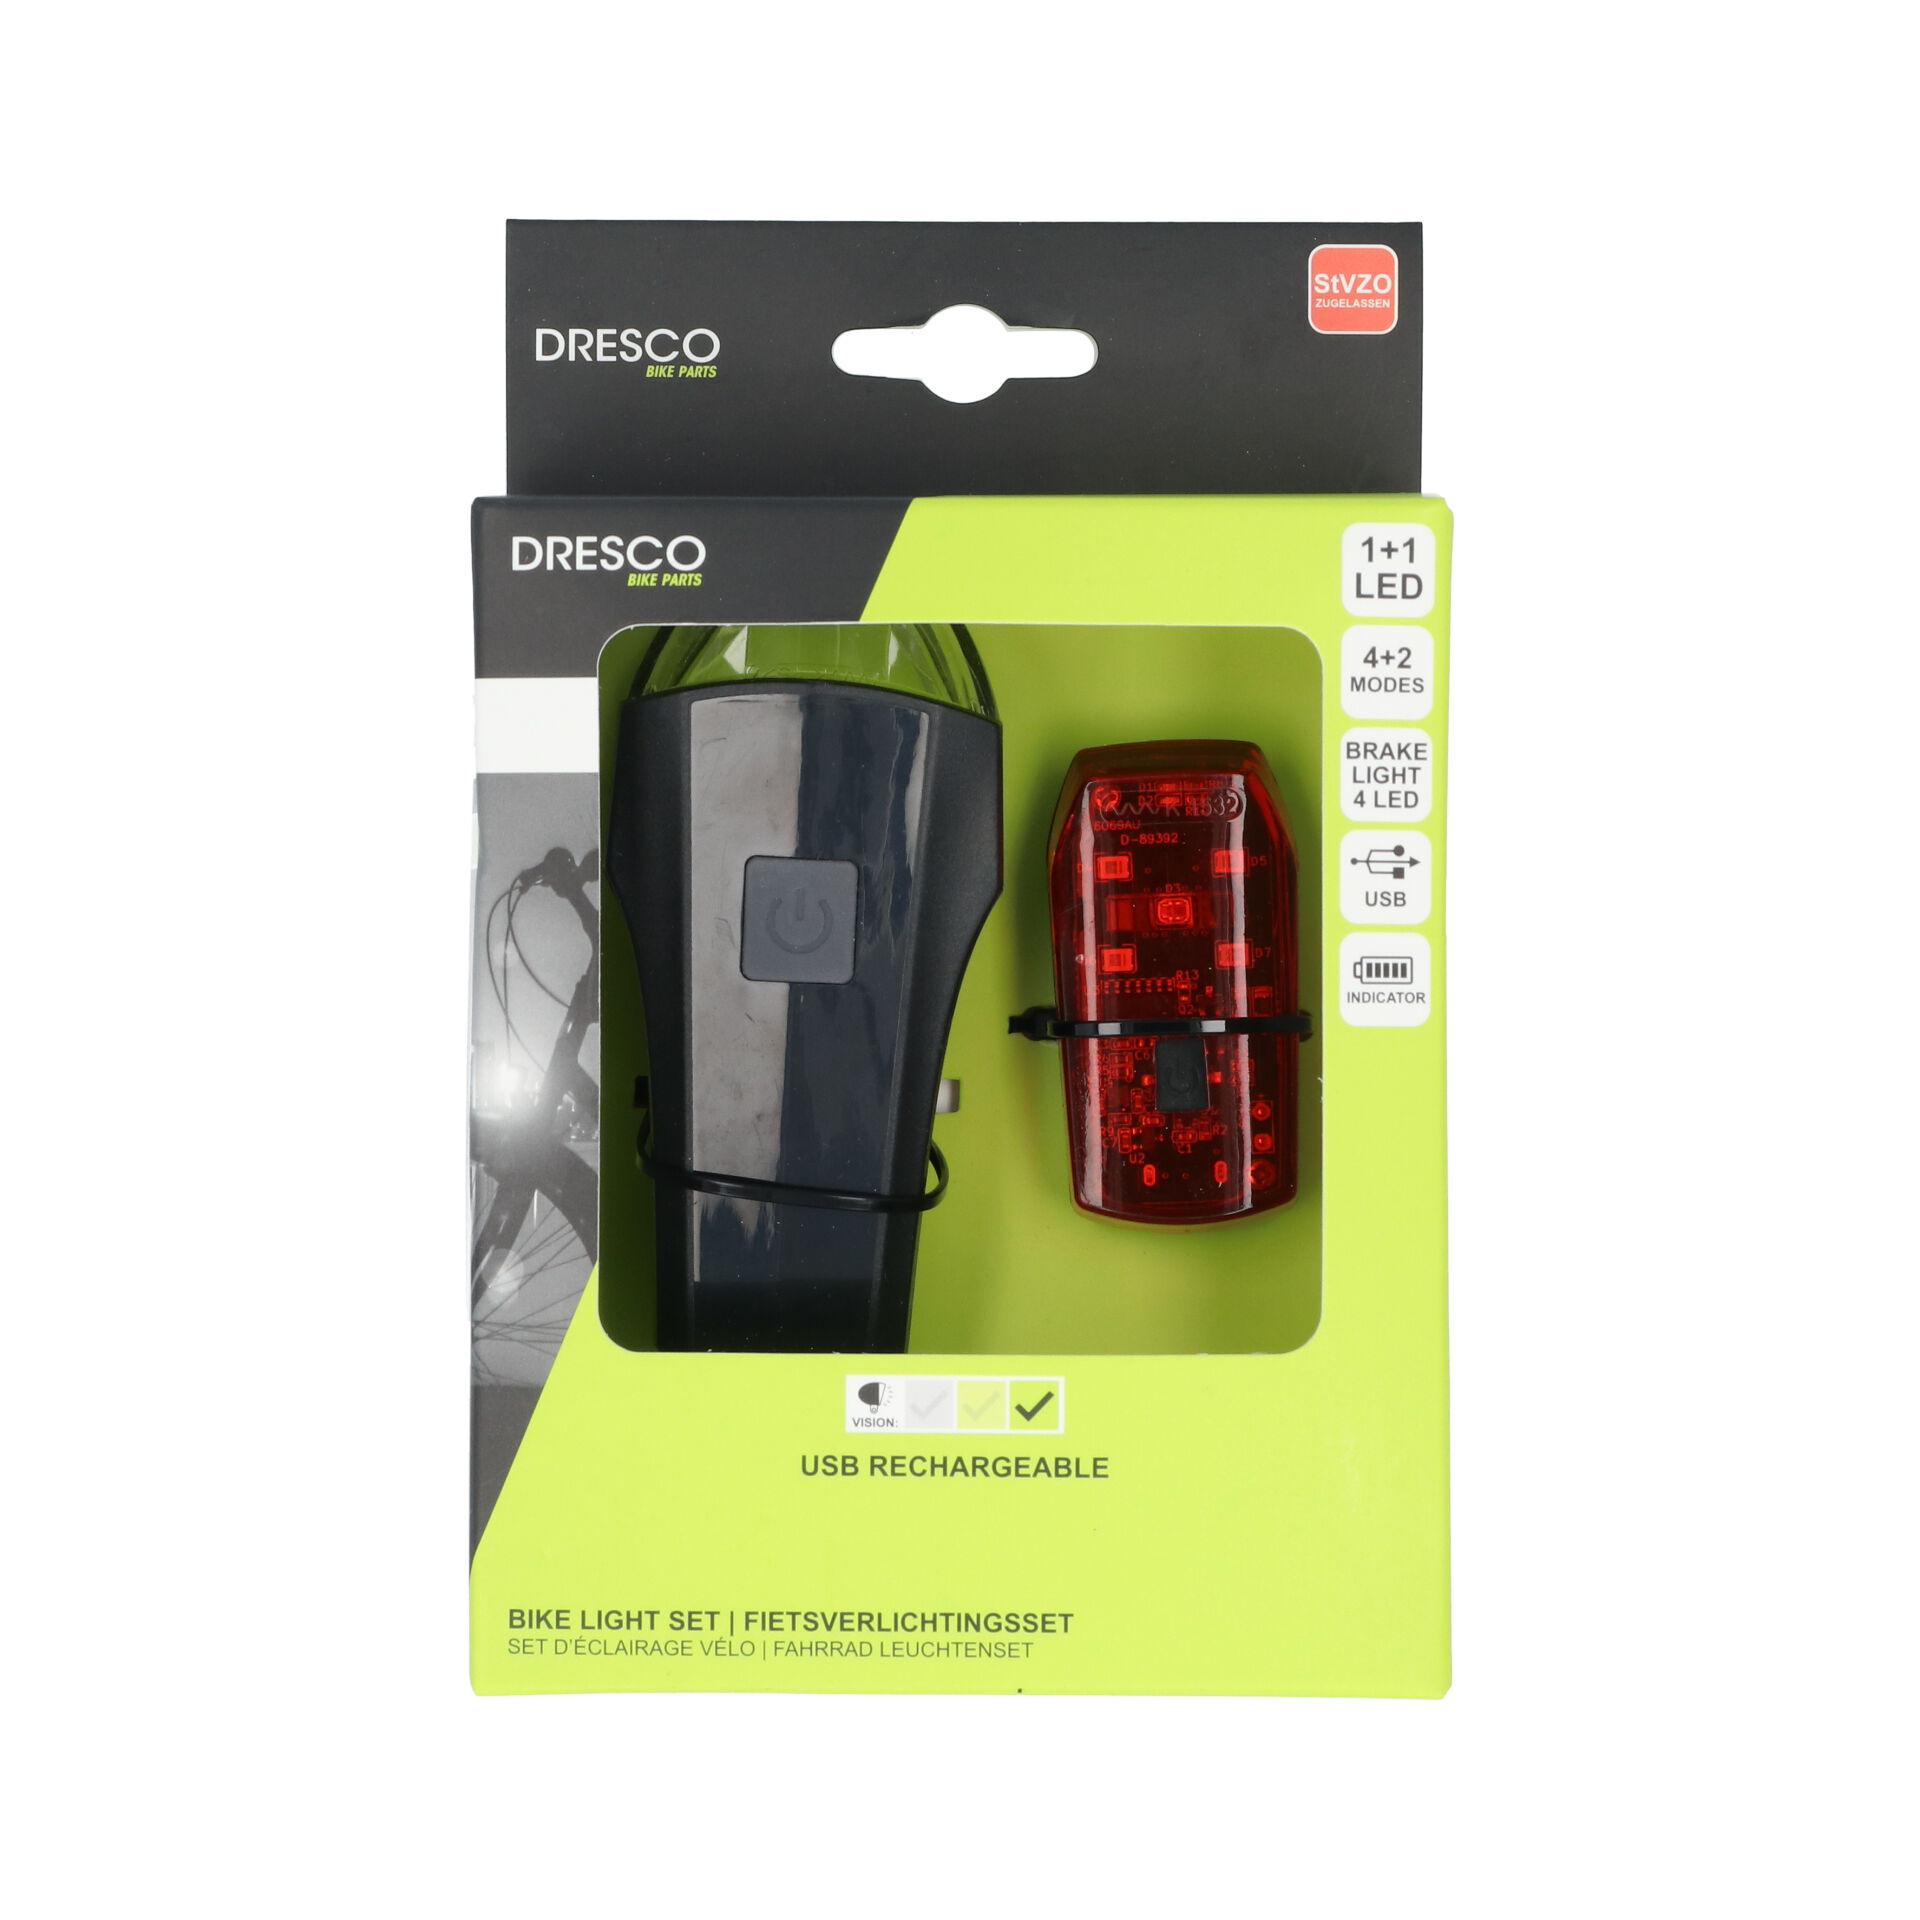 Dresco USB Verlichtingsset Razor 60 Lux (5251215)